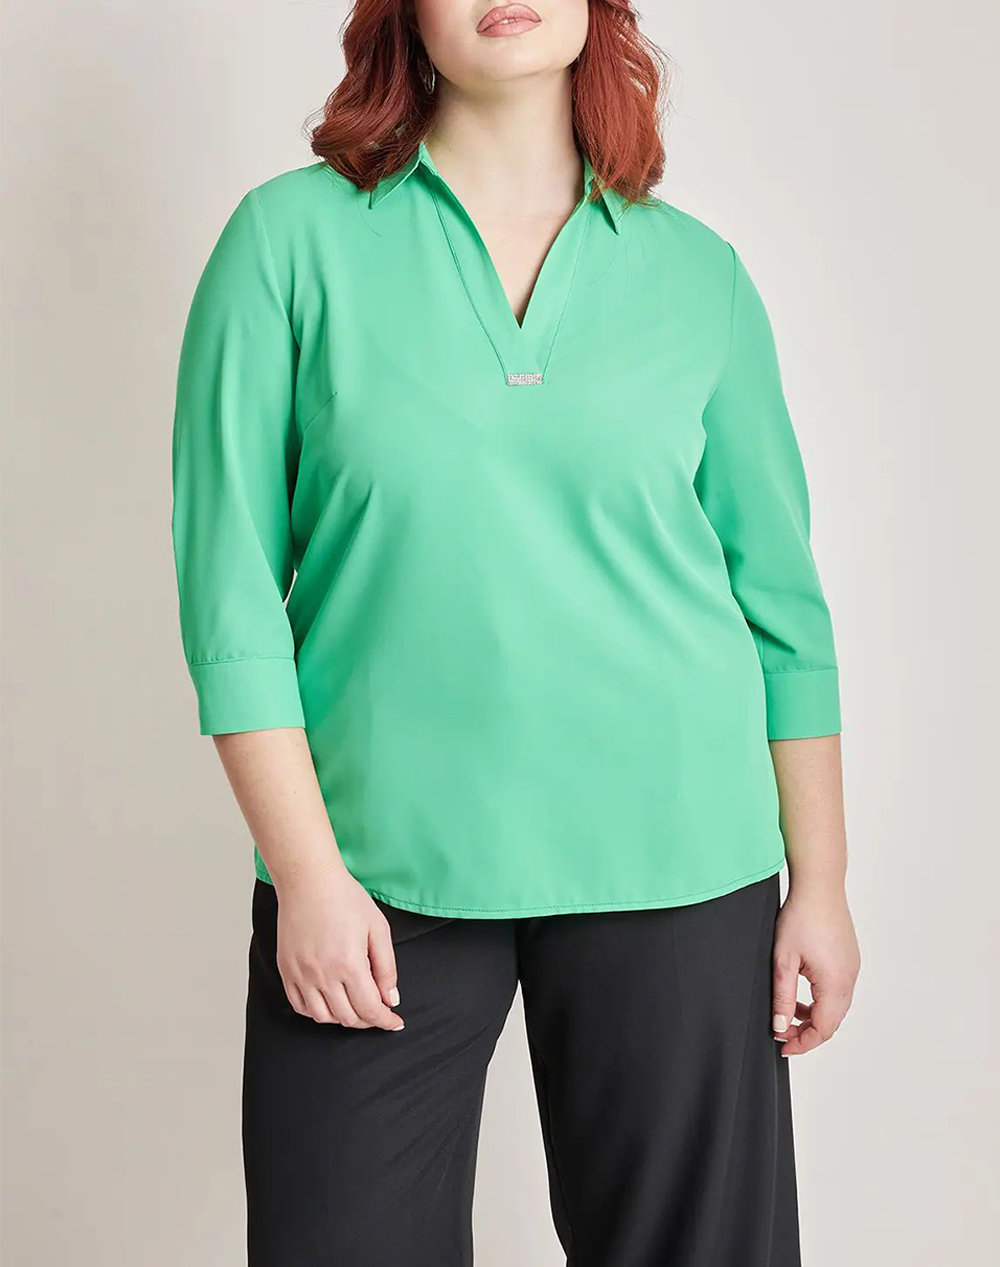 PARABITA Μπλούζα με διακόσμηση στο V 240110770-005 Green